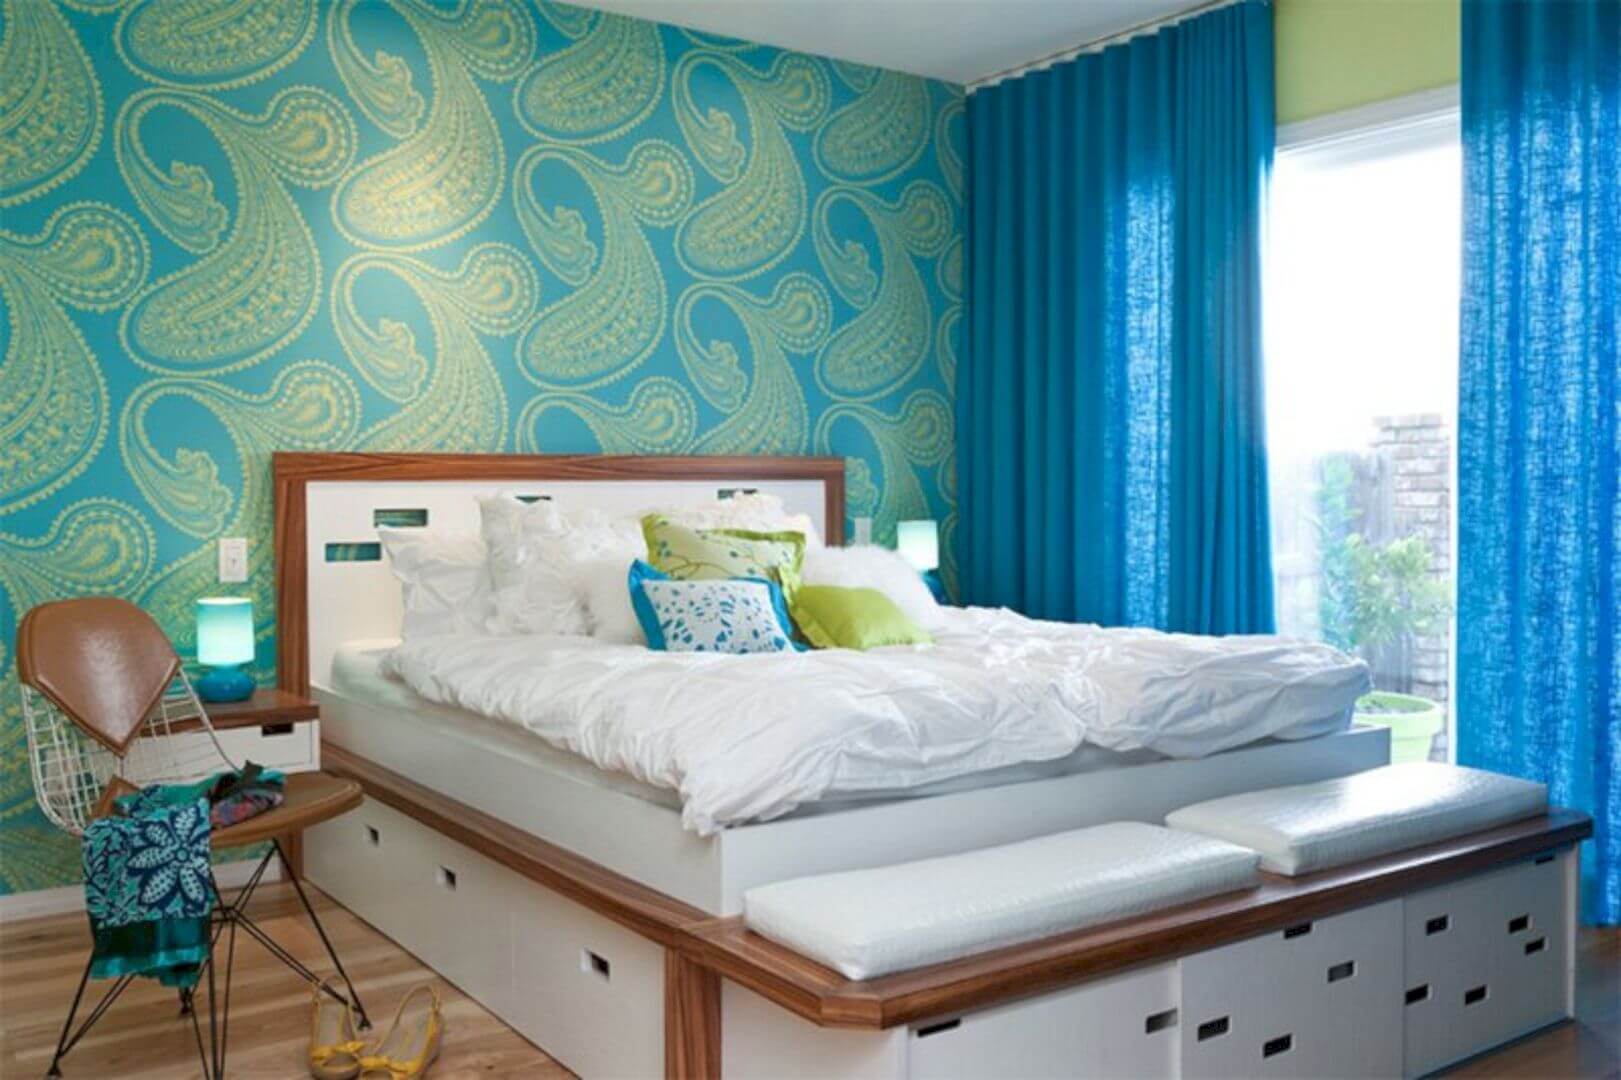 mid century modern bedroom design ideas